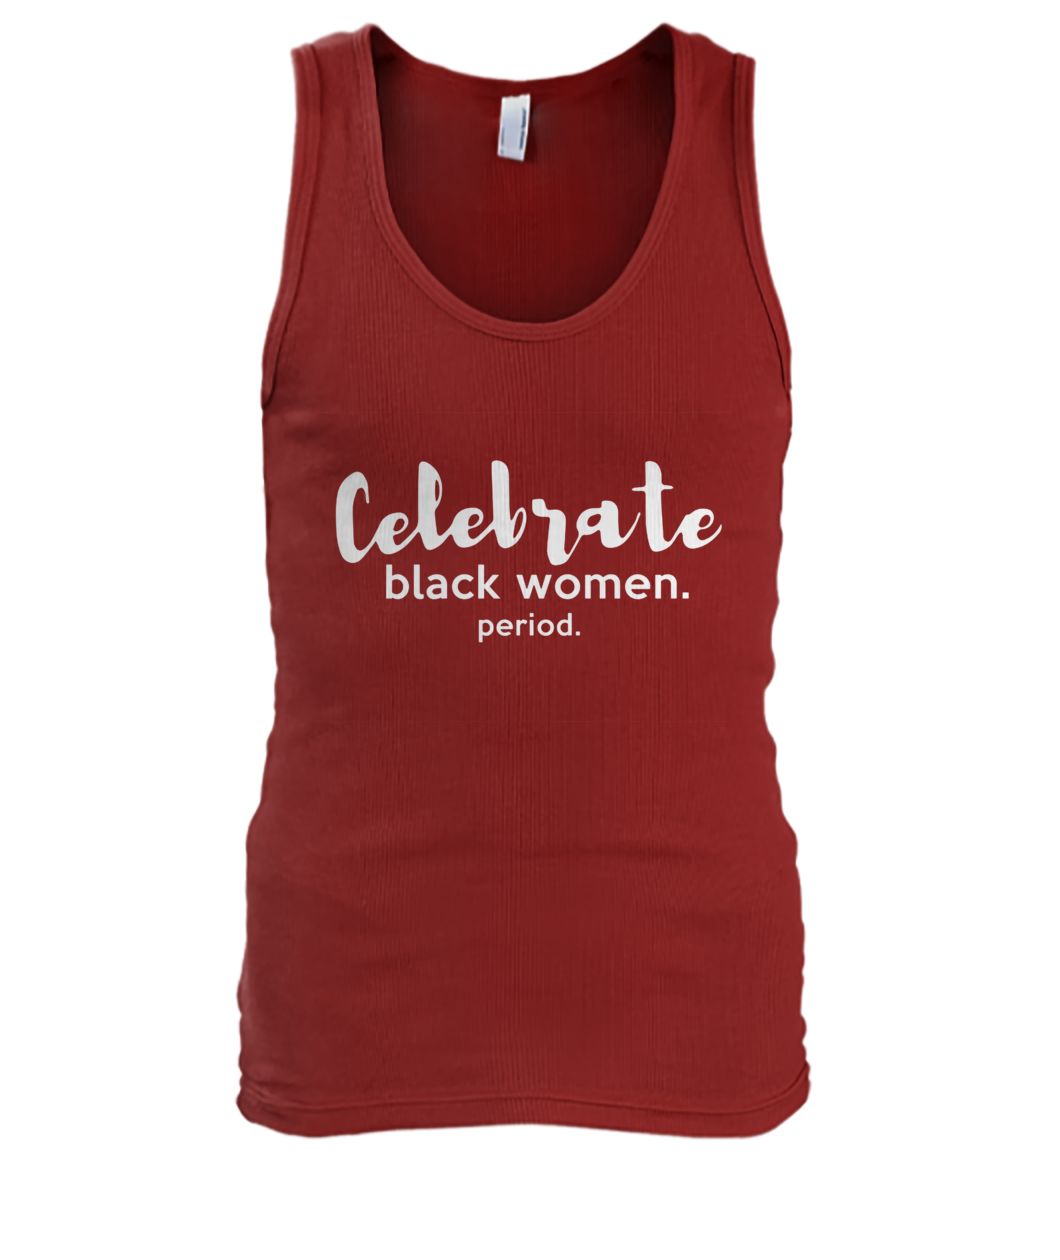 Celebrate black women period men's tank top